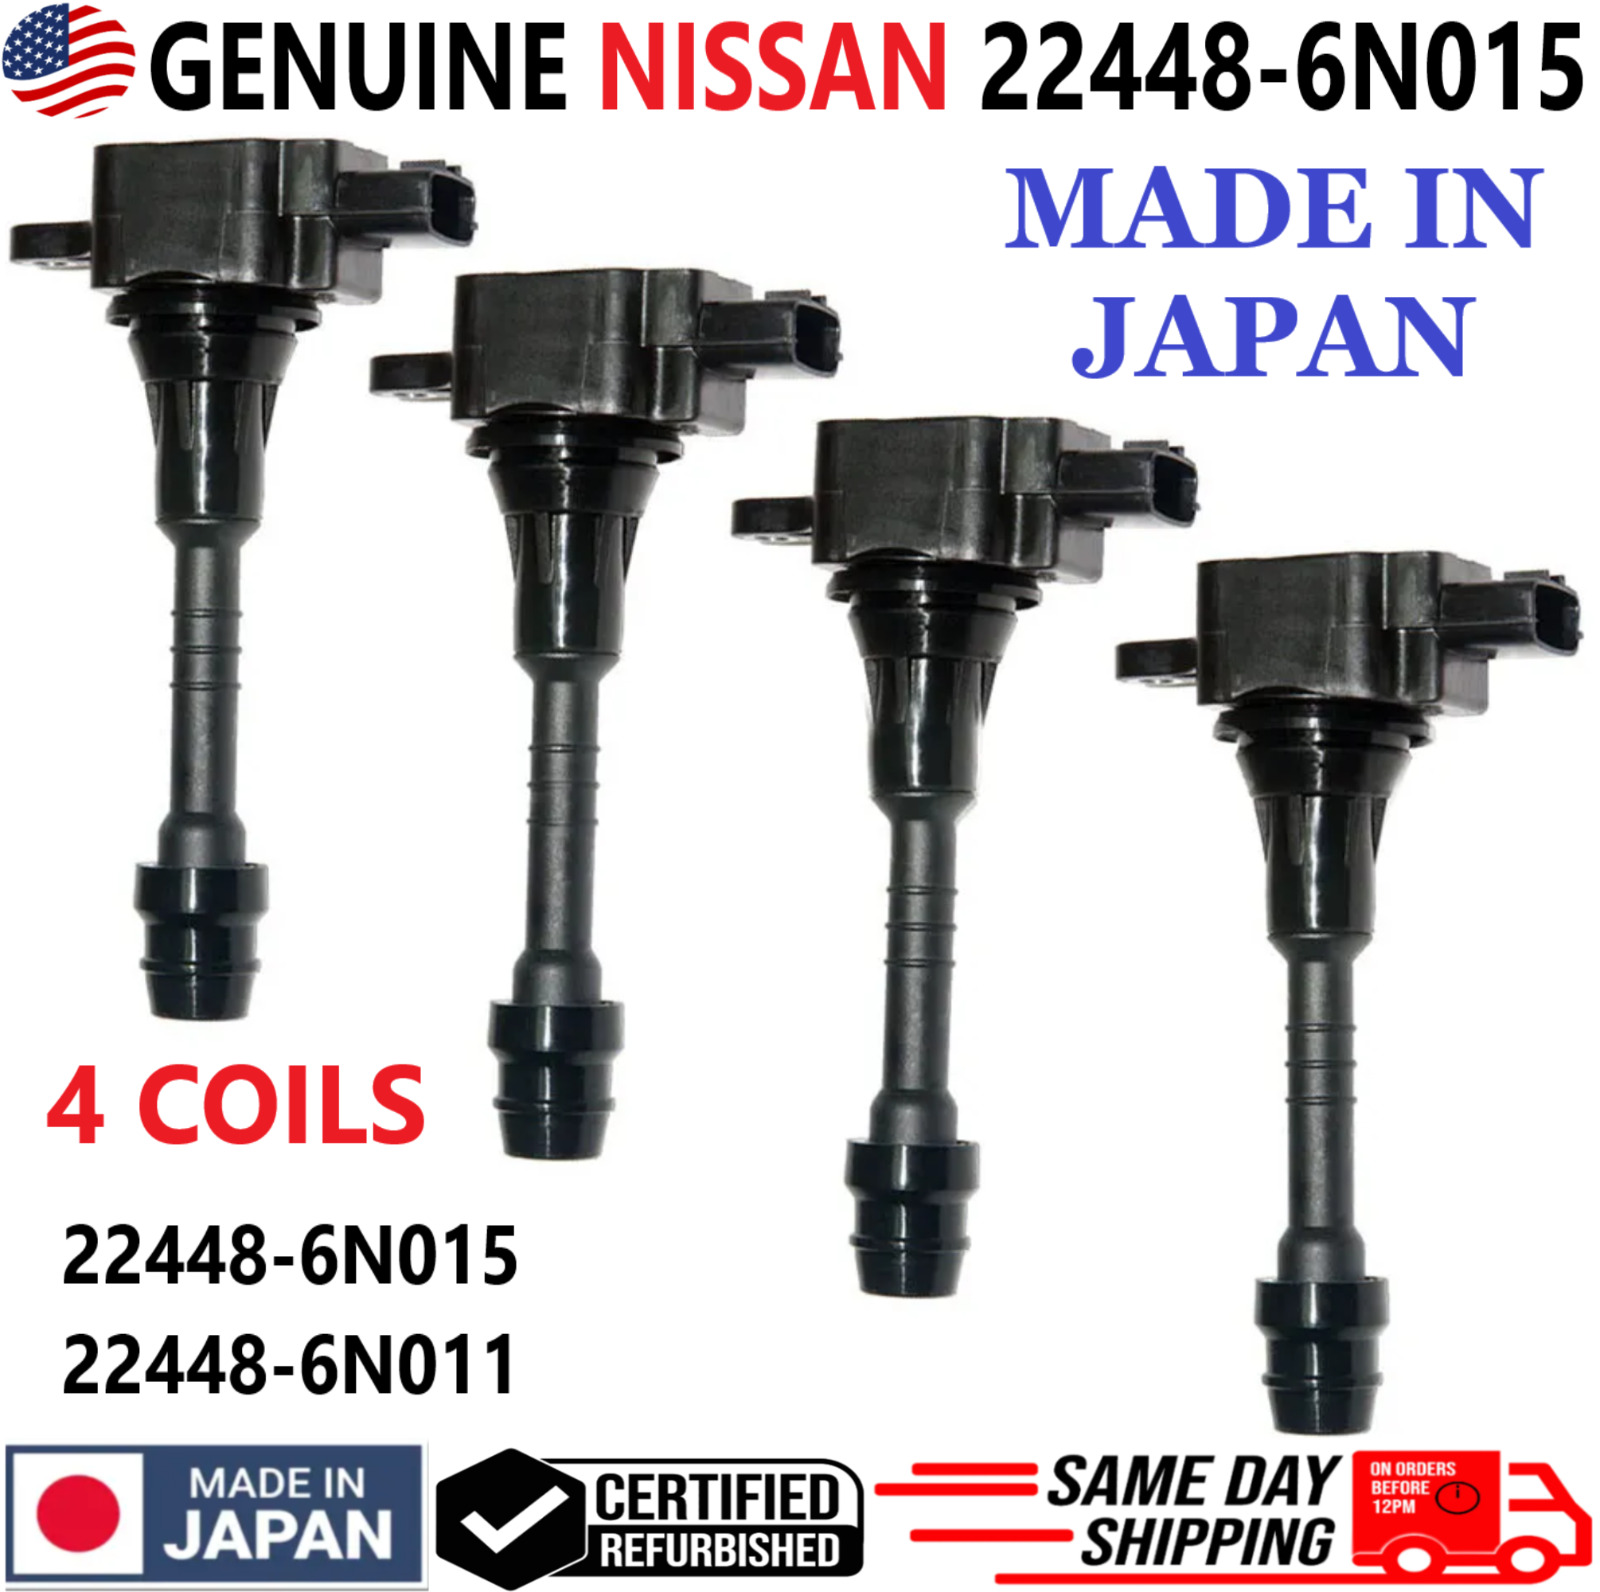 GENUINE Ignition Coils For 2001-2006 Nissan Sentra & Altima 1.8L I4, 22448-6N015